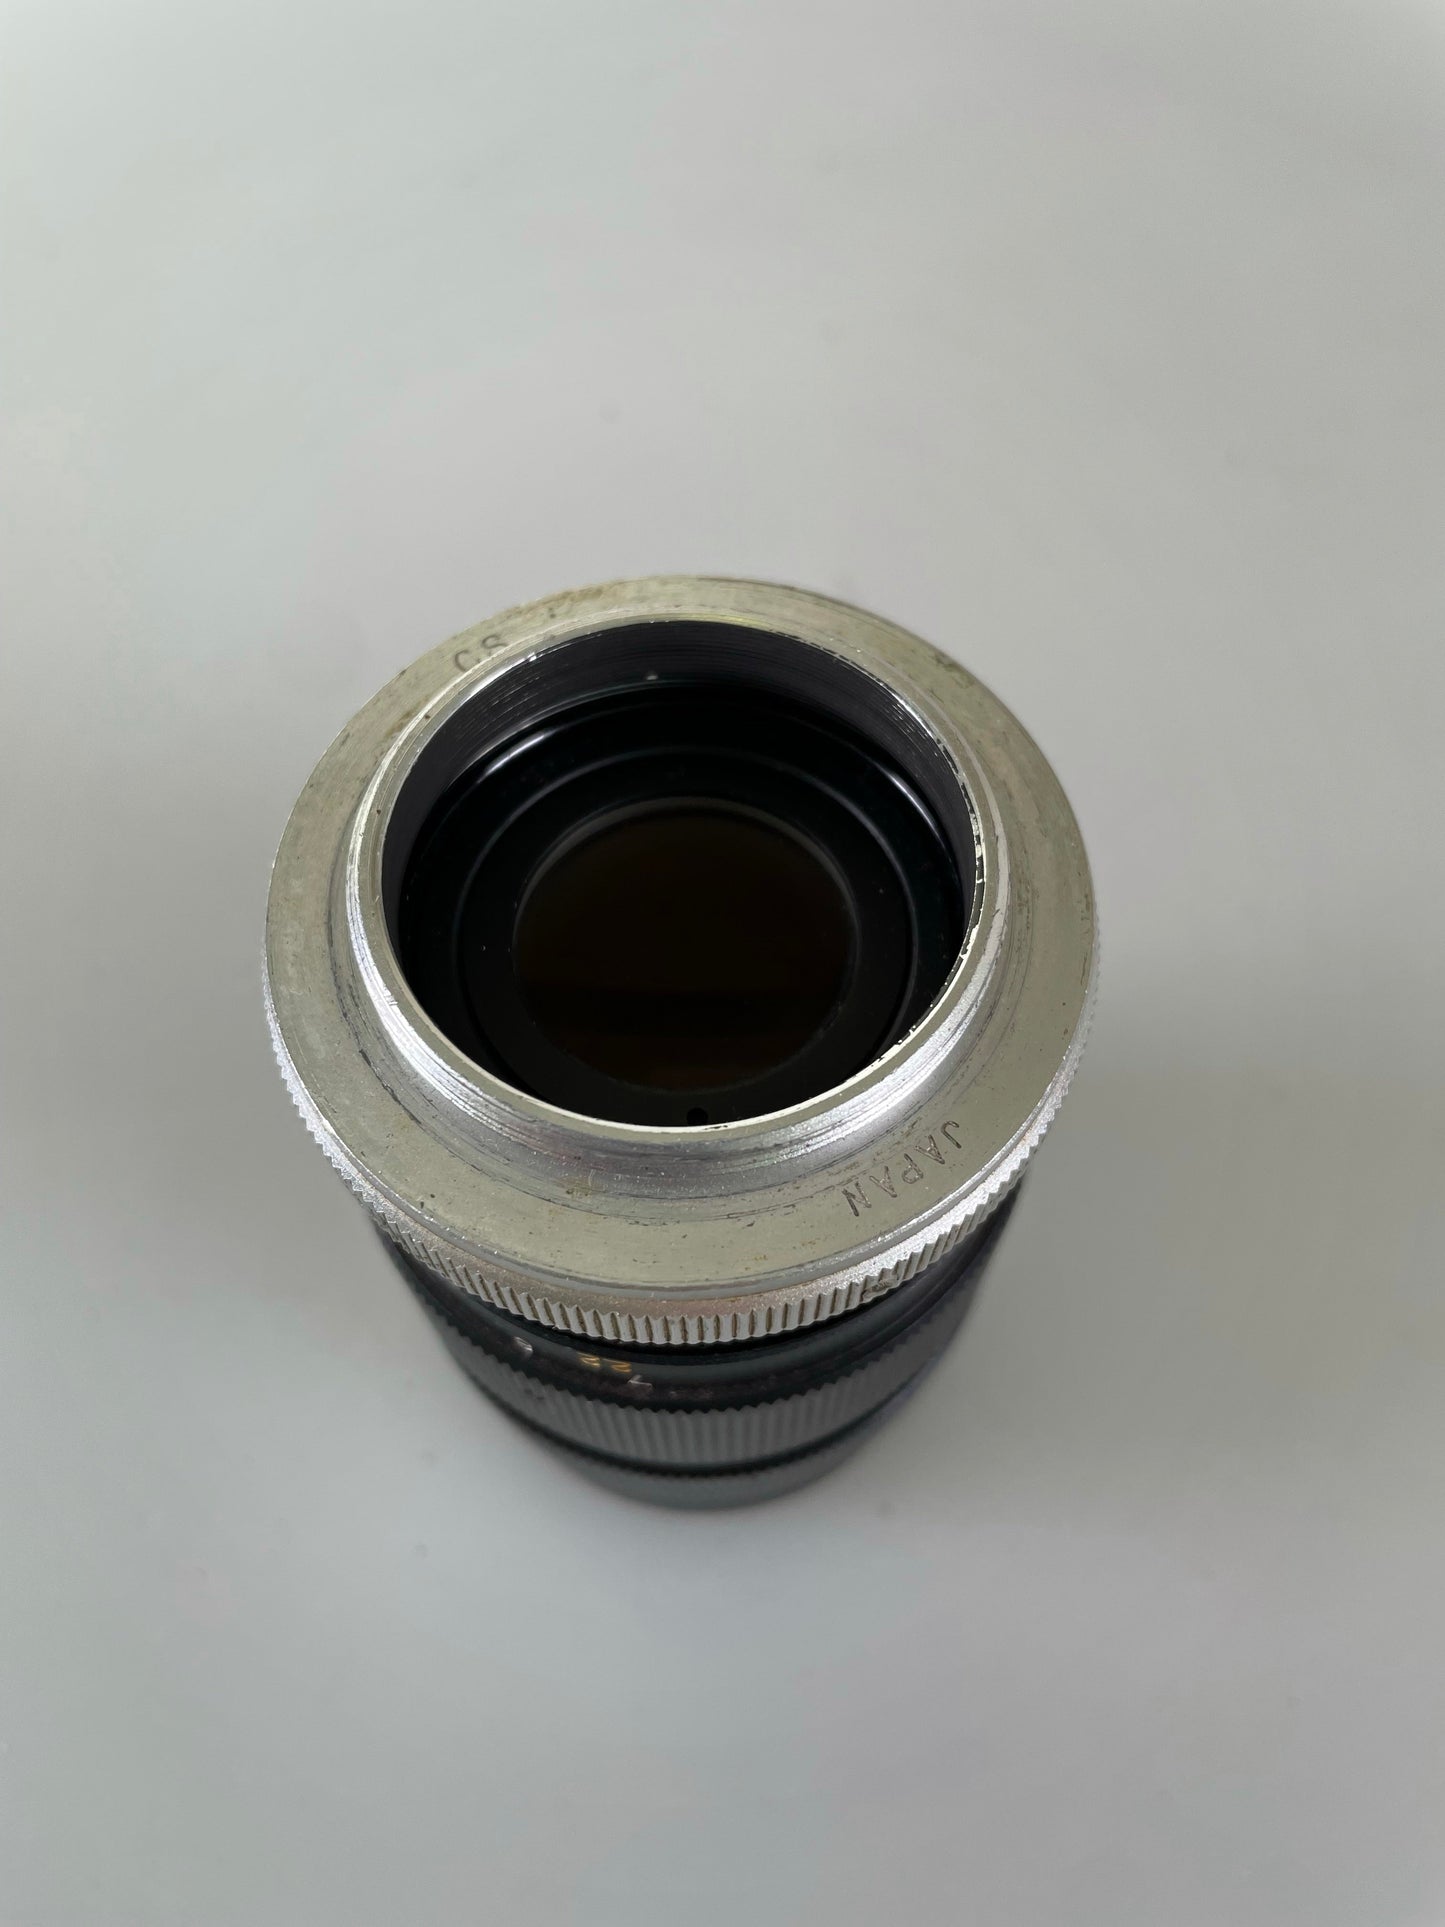 Lentar M42 mount 135mm f3.5 Lens